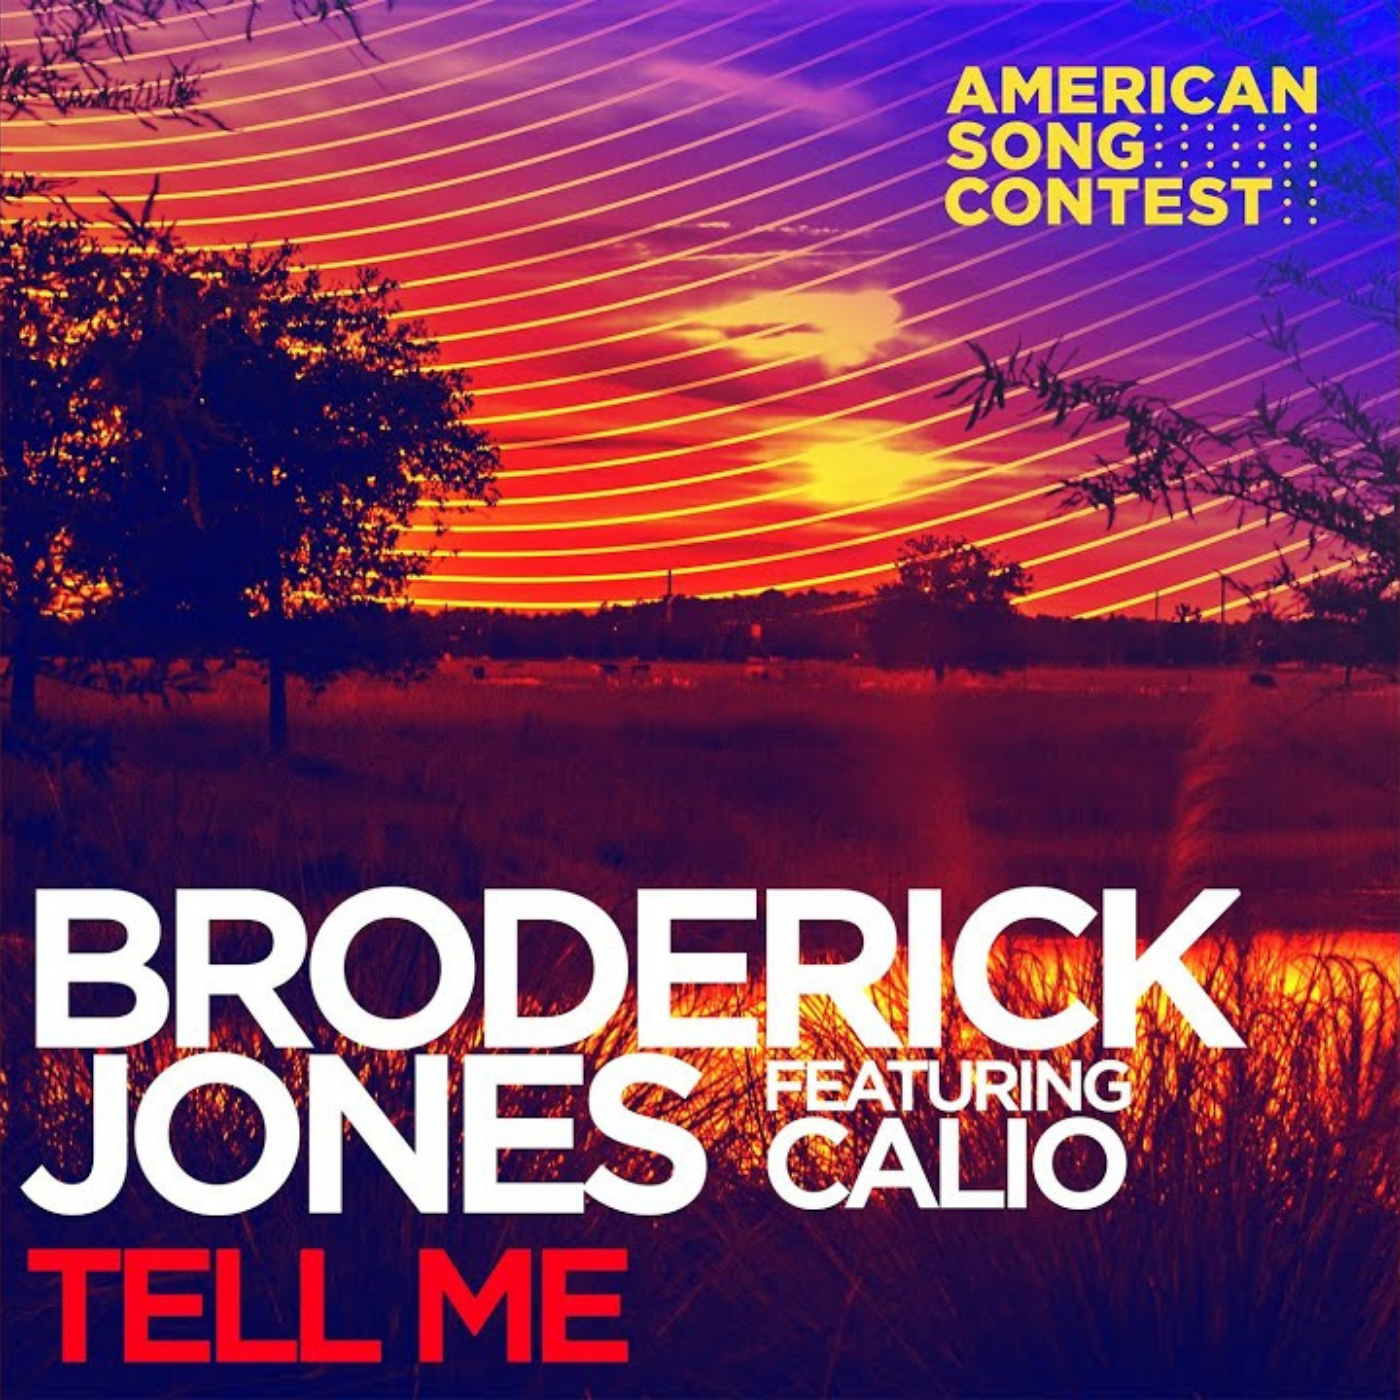 Broderick Jones featuring Calio — Tell Me cover artwork